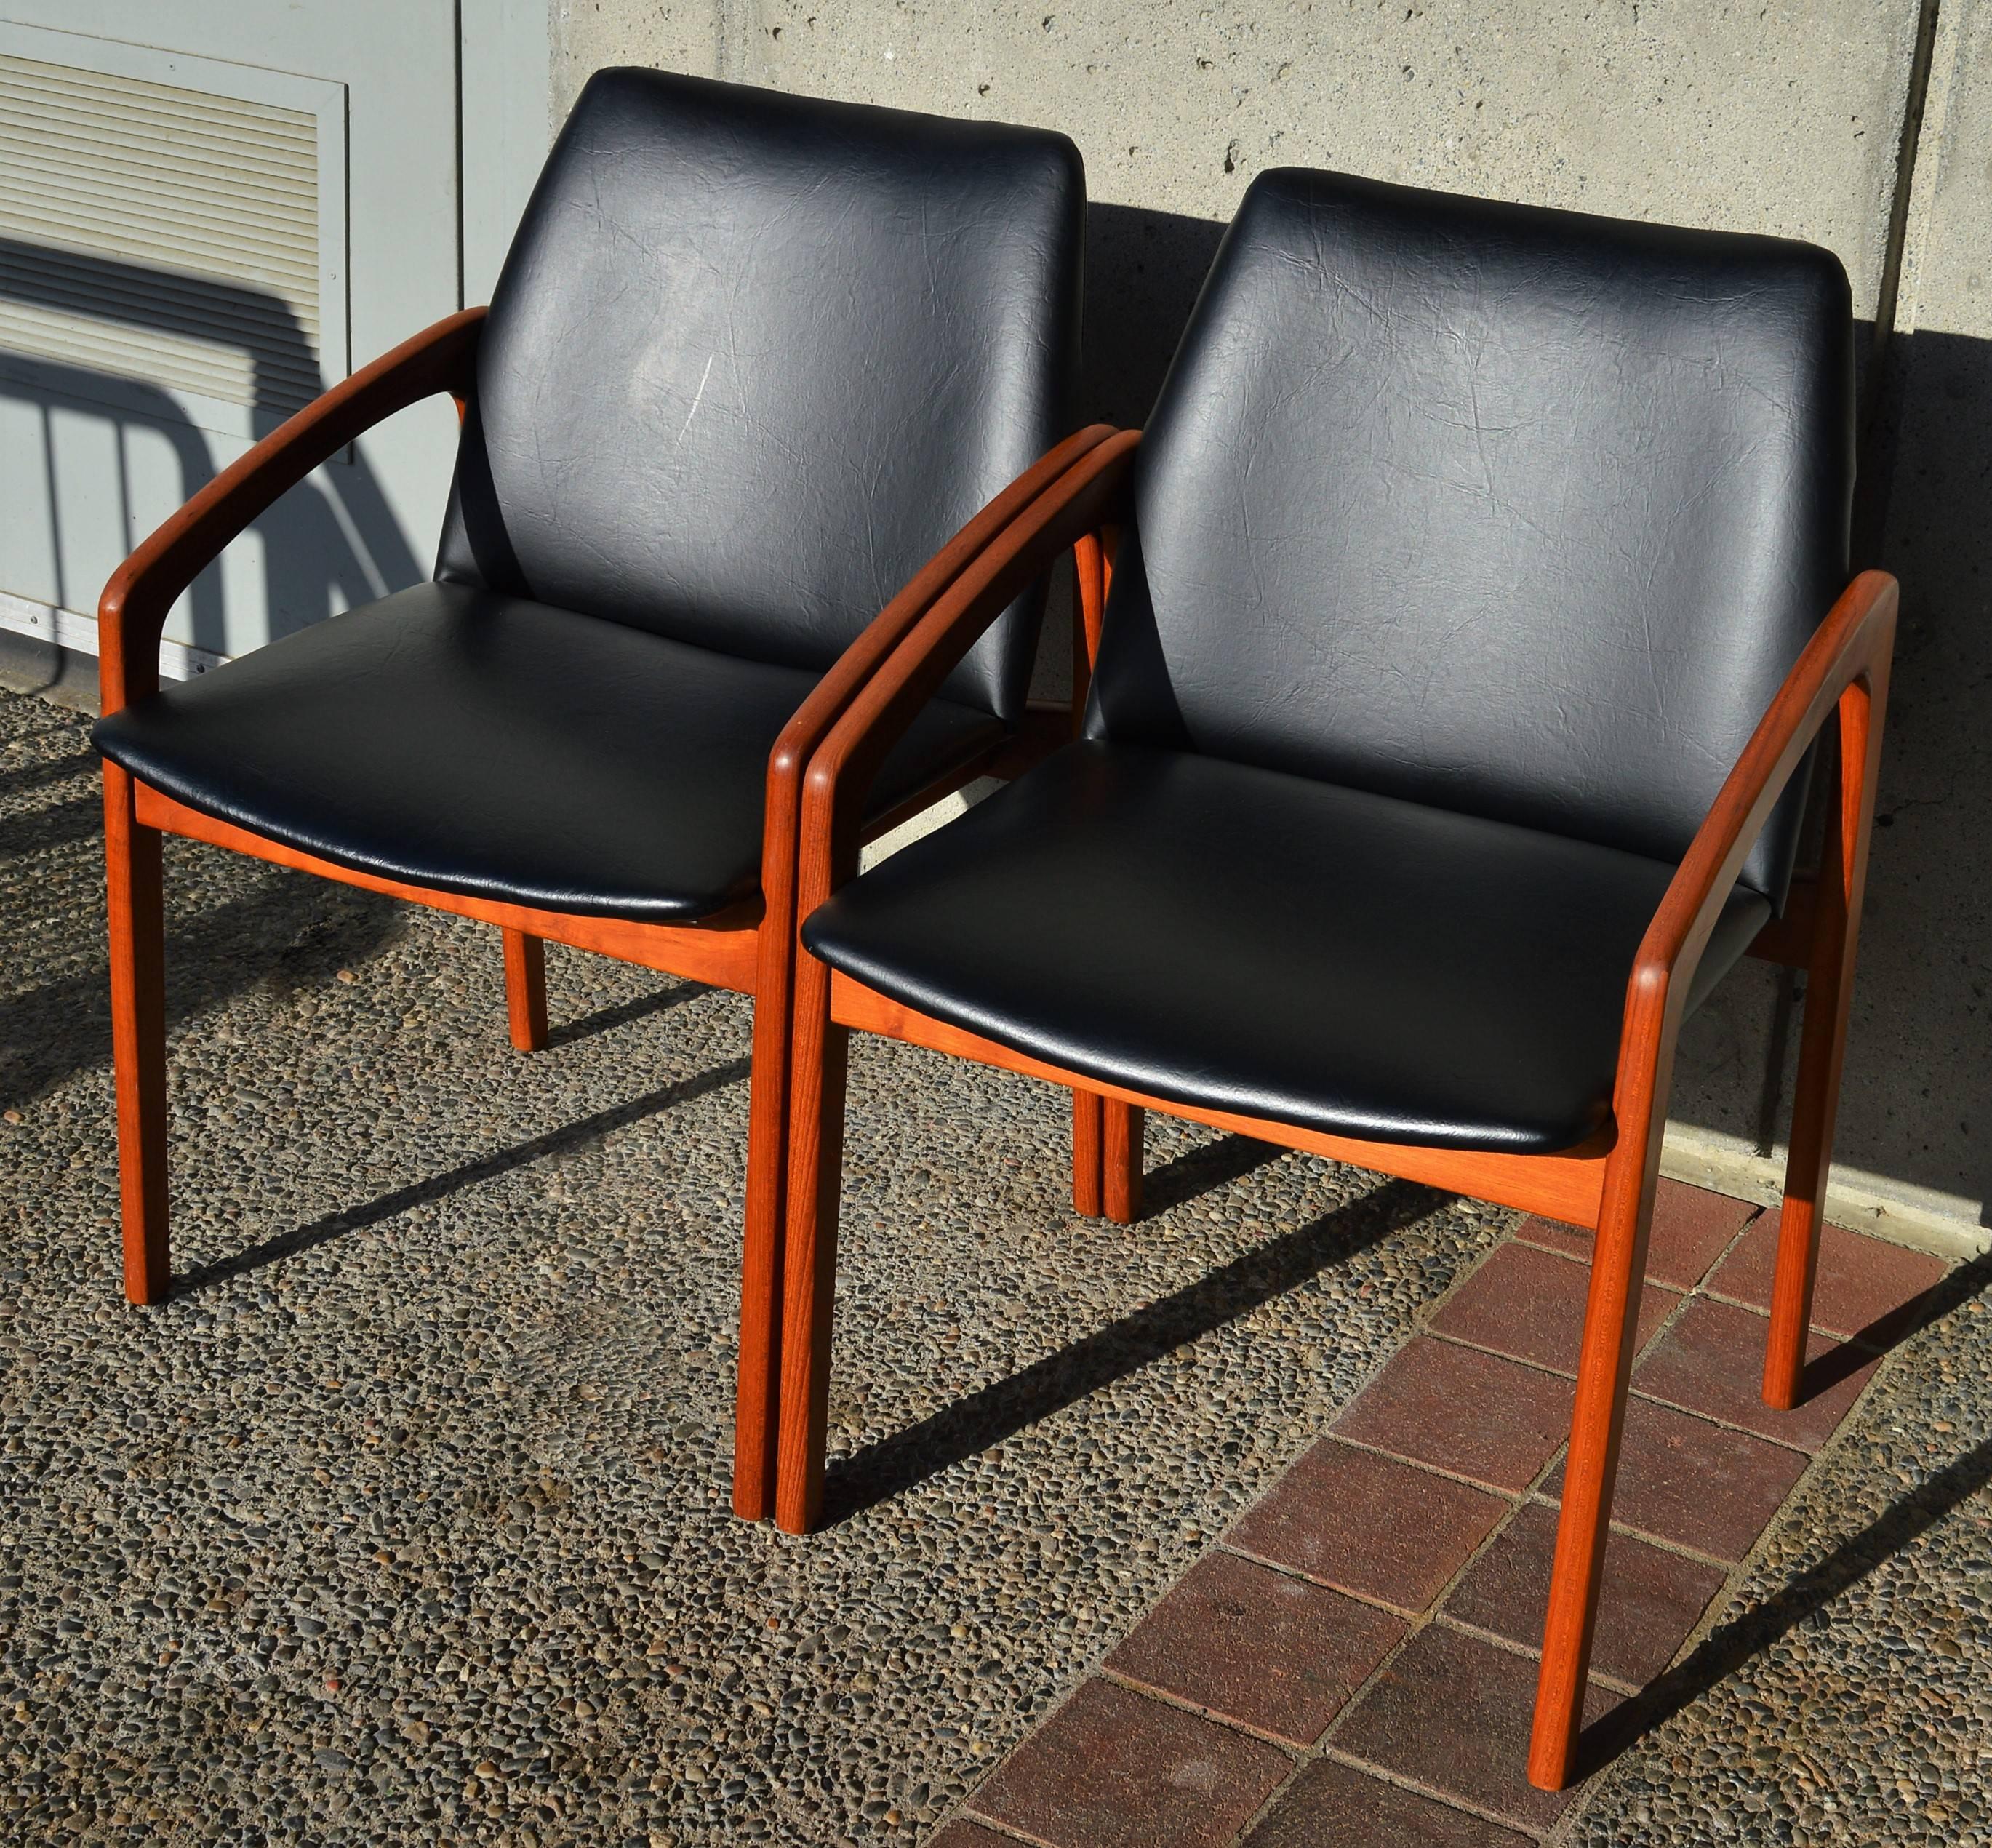 Pair of Kai Kristiansen Teak Carvers or Side Chairs, Danish (Dänisch)